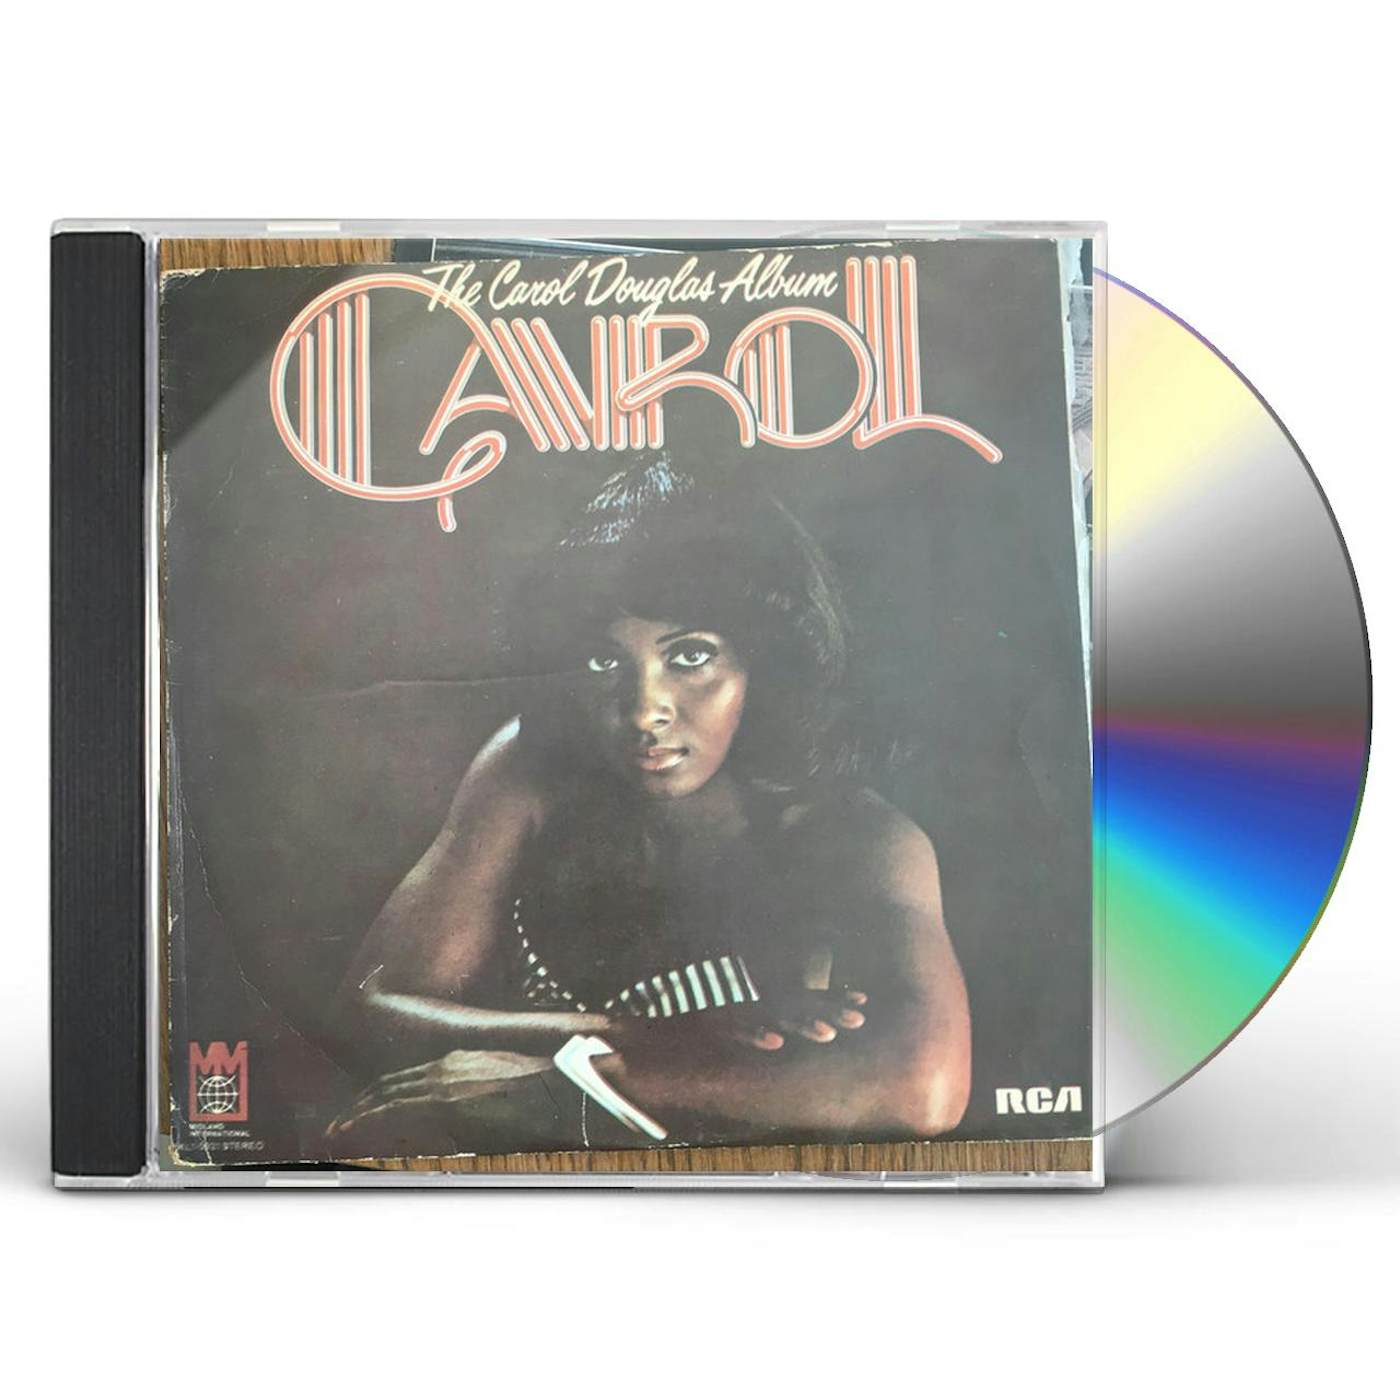 CAROL DOUGLAS ALBUM CD